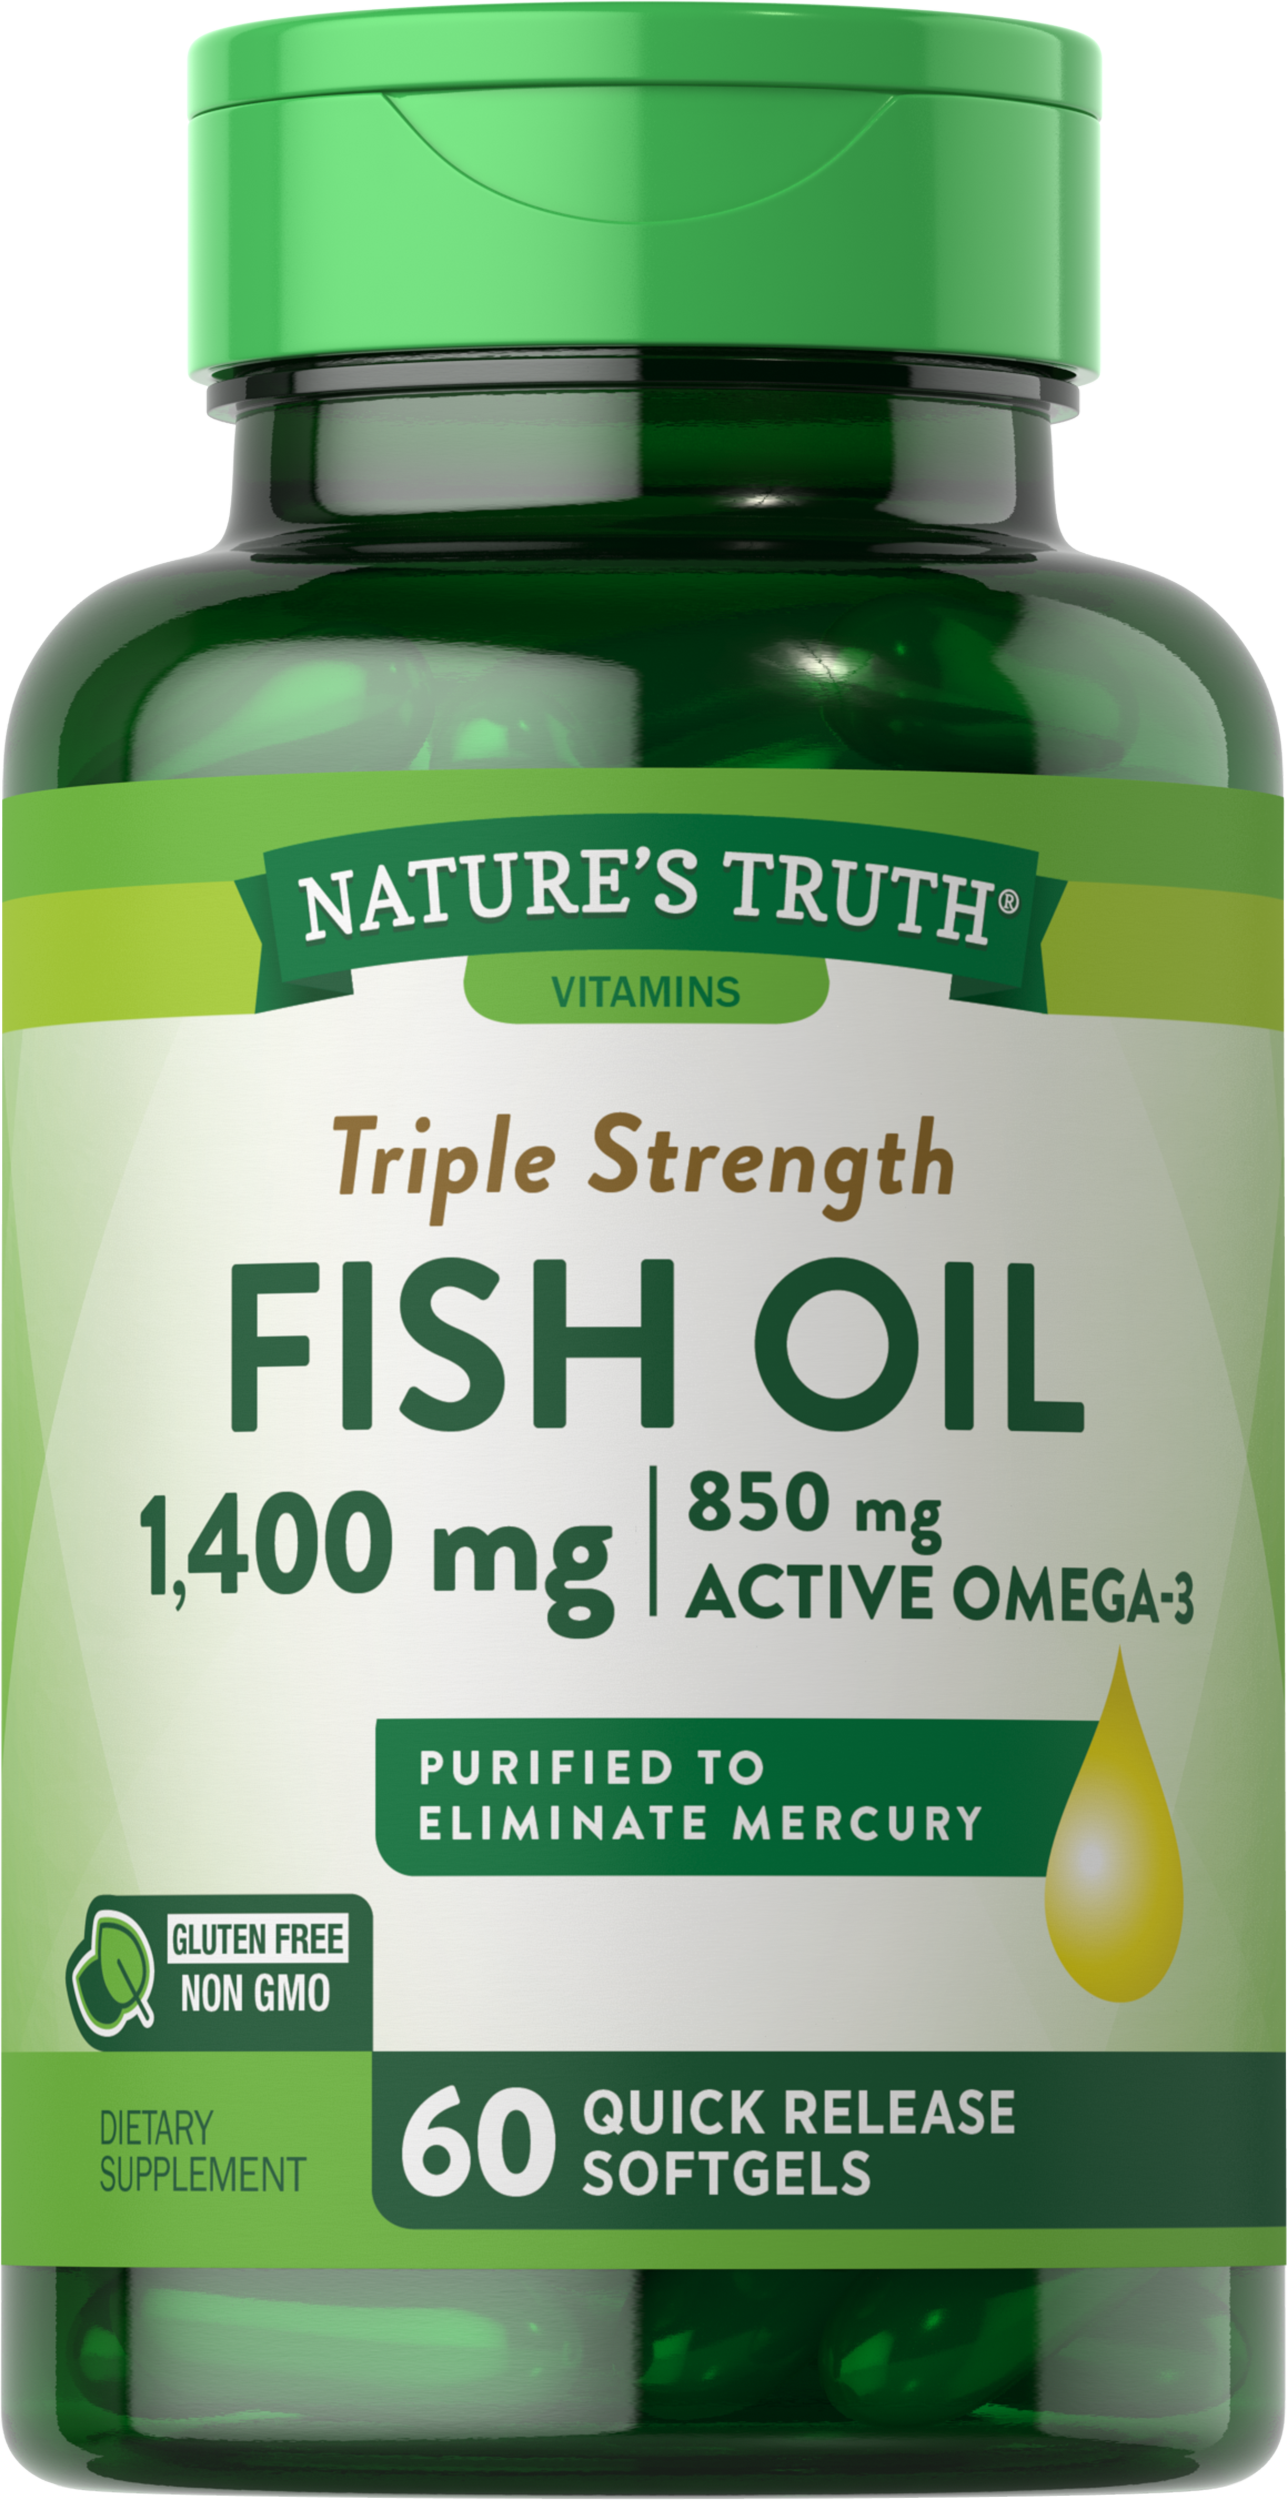 Fish Oil Omega 3 1400 mg